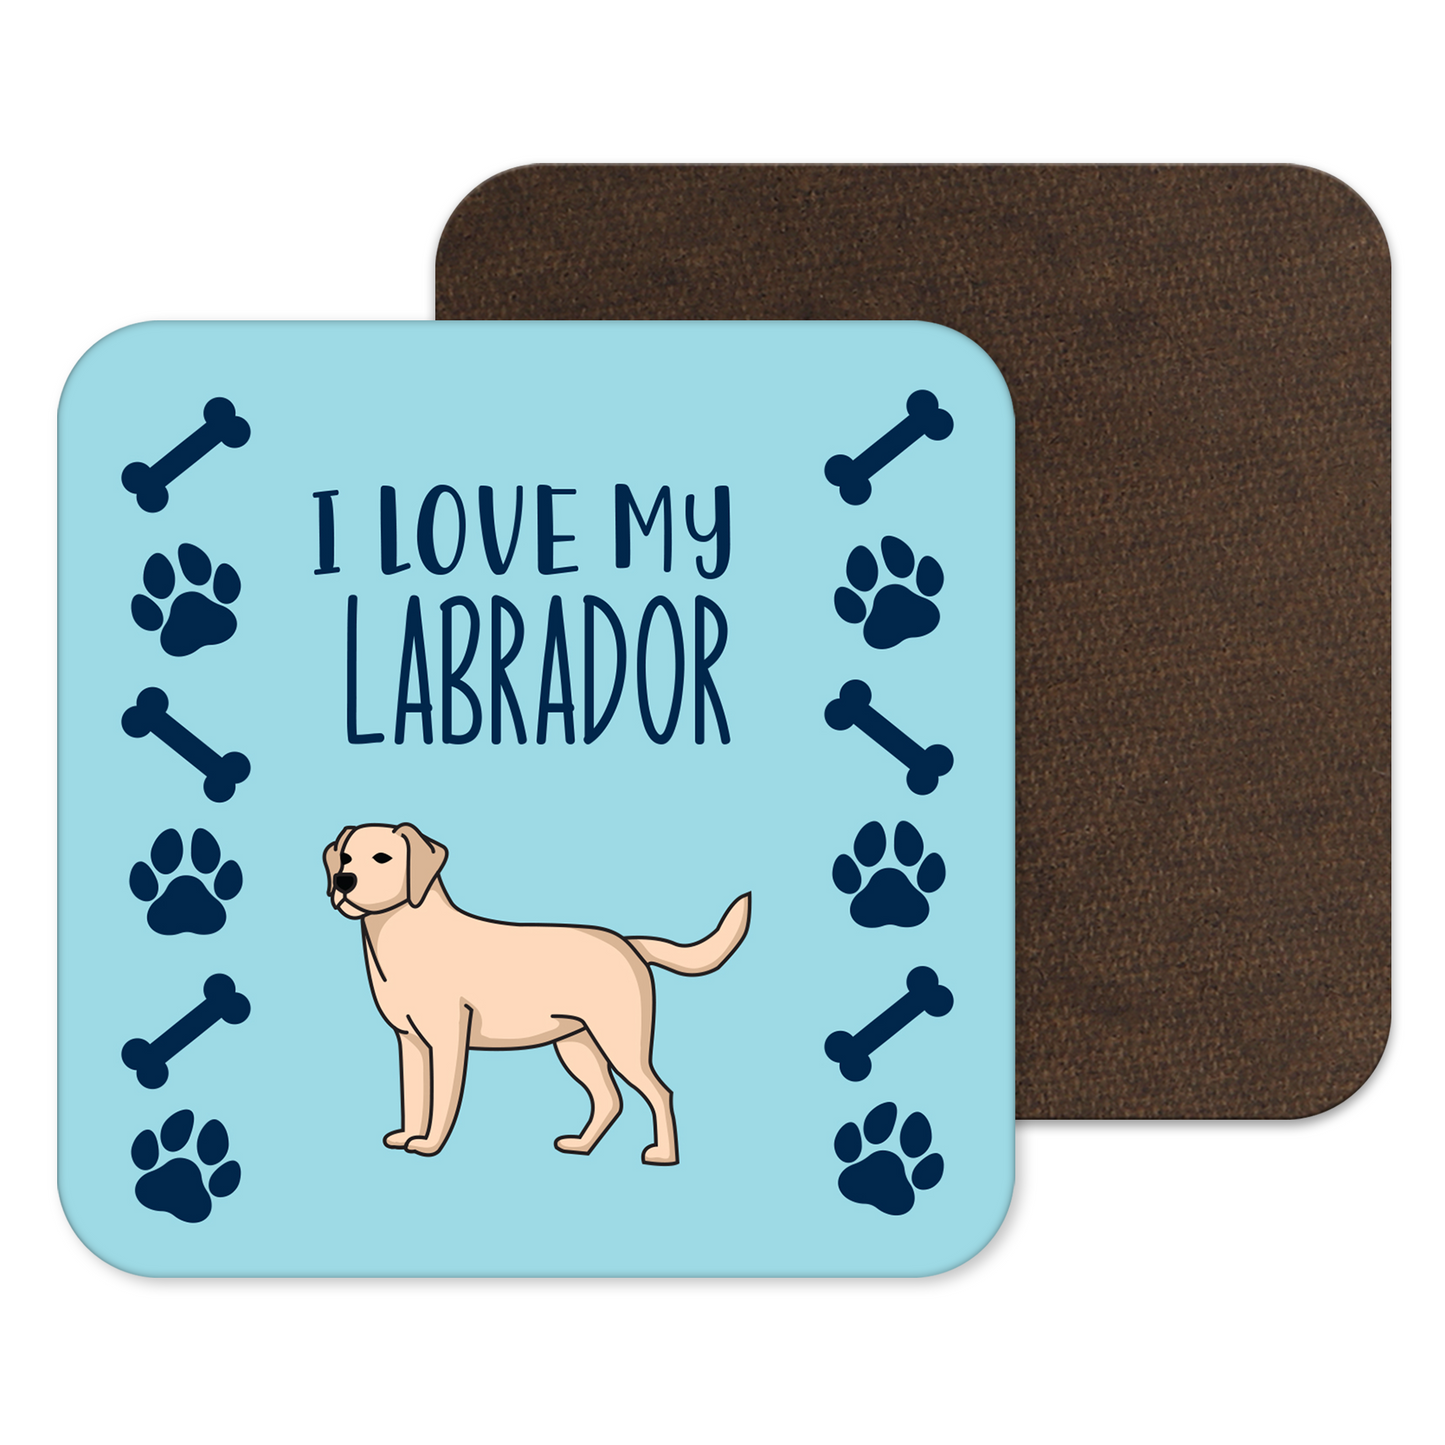 I Love My Labrador Coaster